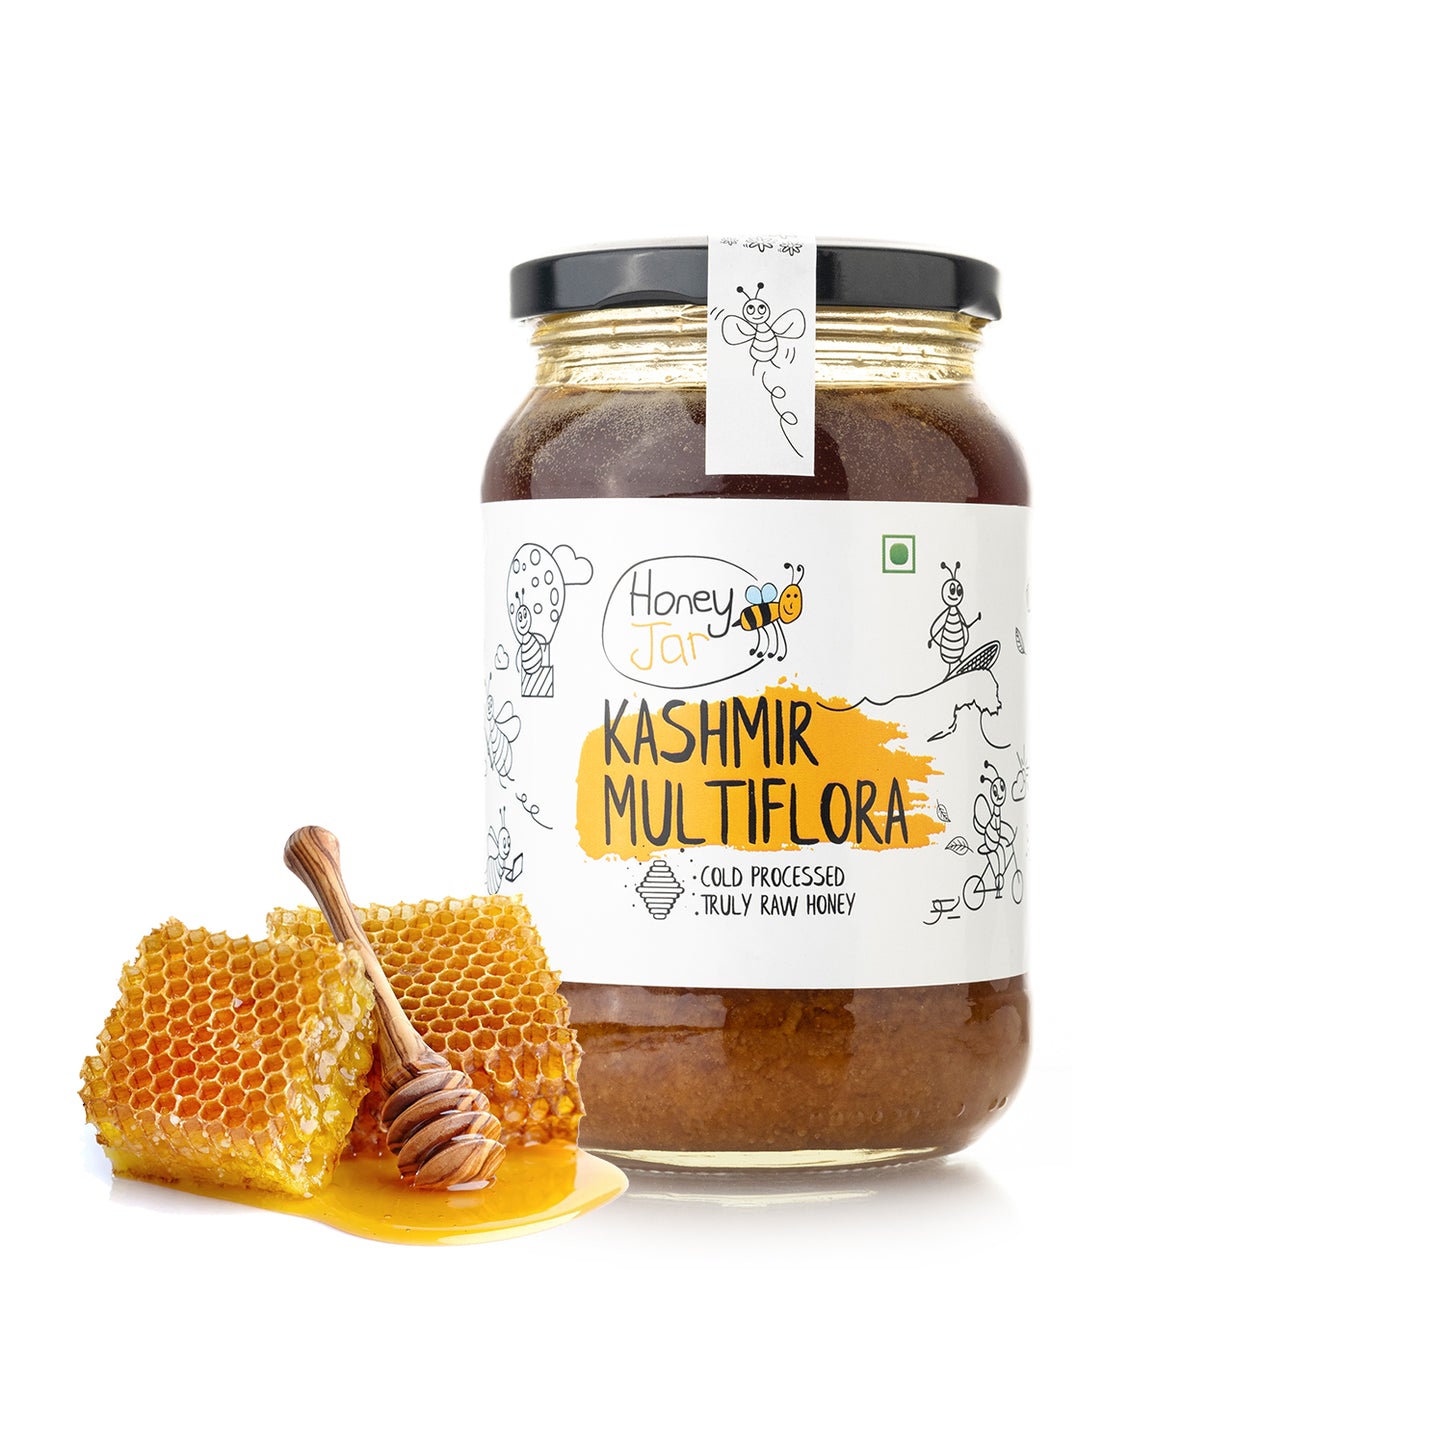 Kashmir Multiflora Raw Honey | Pure Honey - NMR Tested